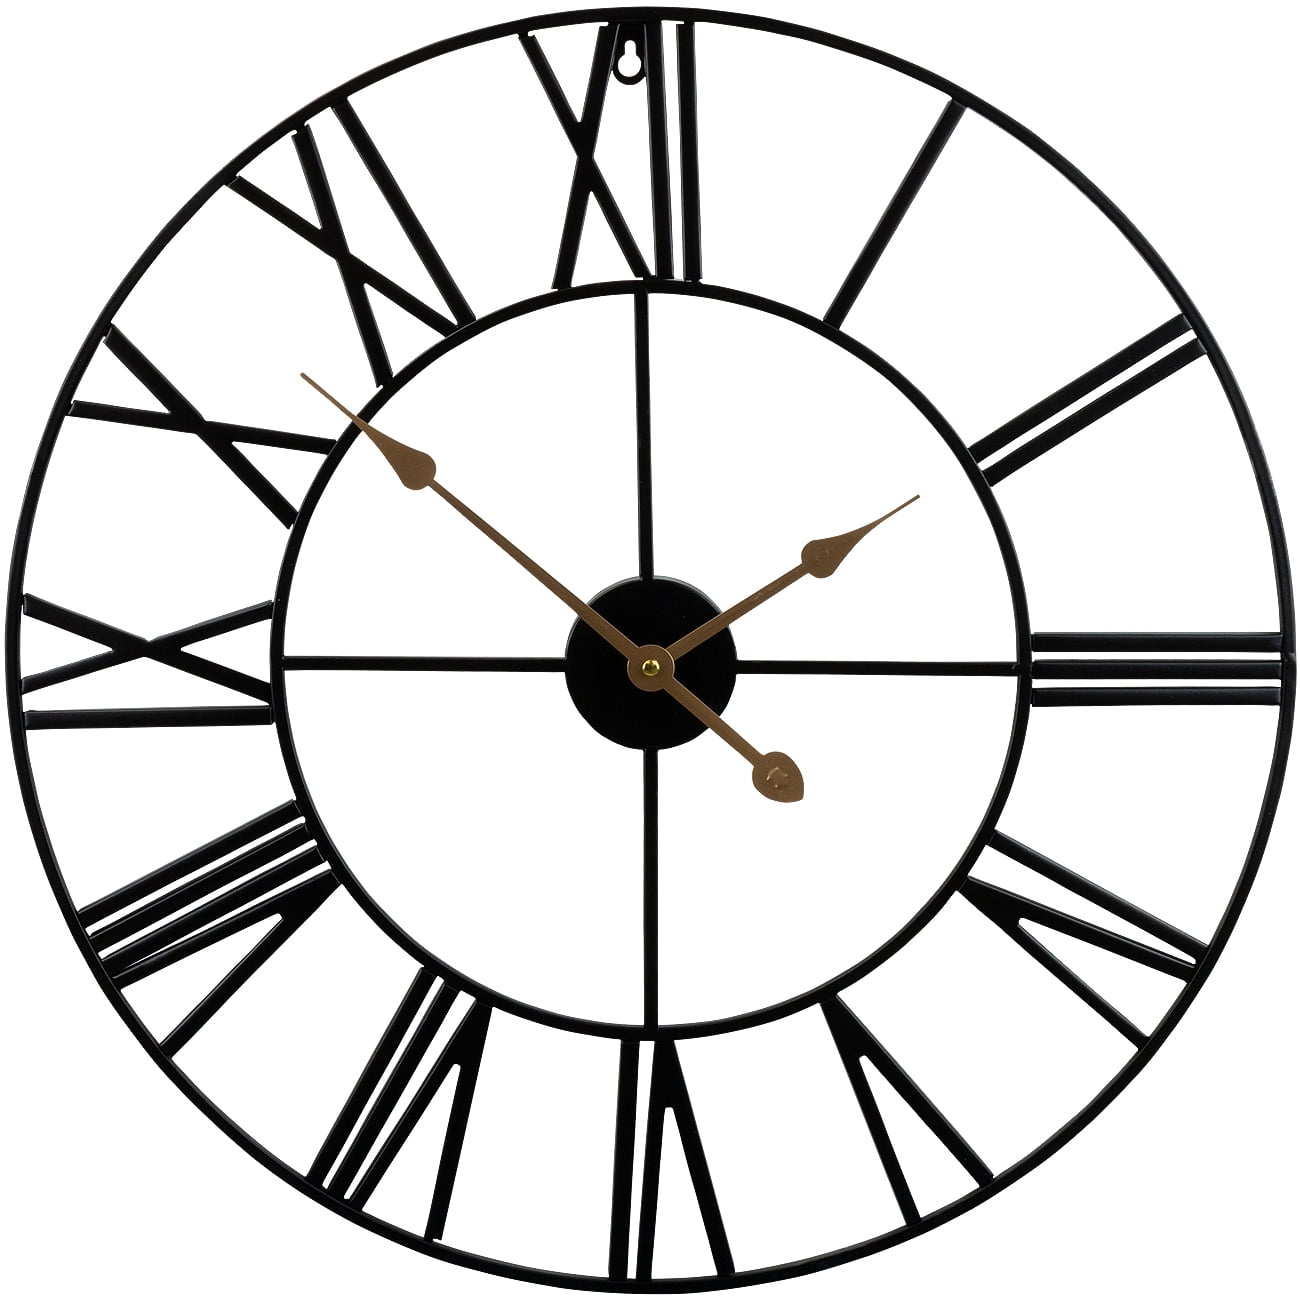 24 inch Classic; a Black Indoor/Outdoor Wall Clock